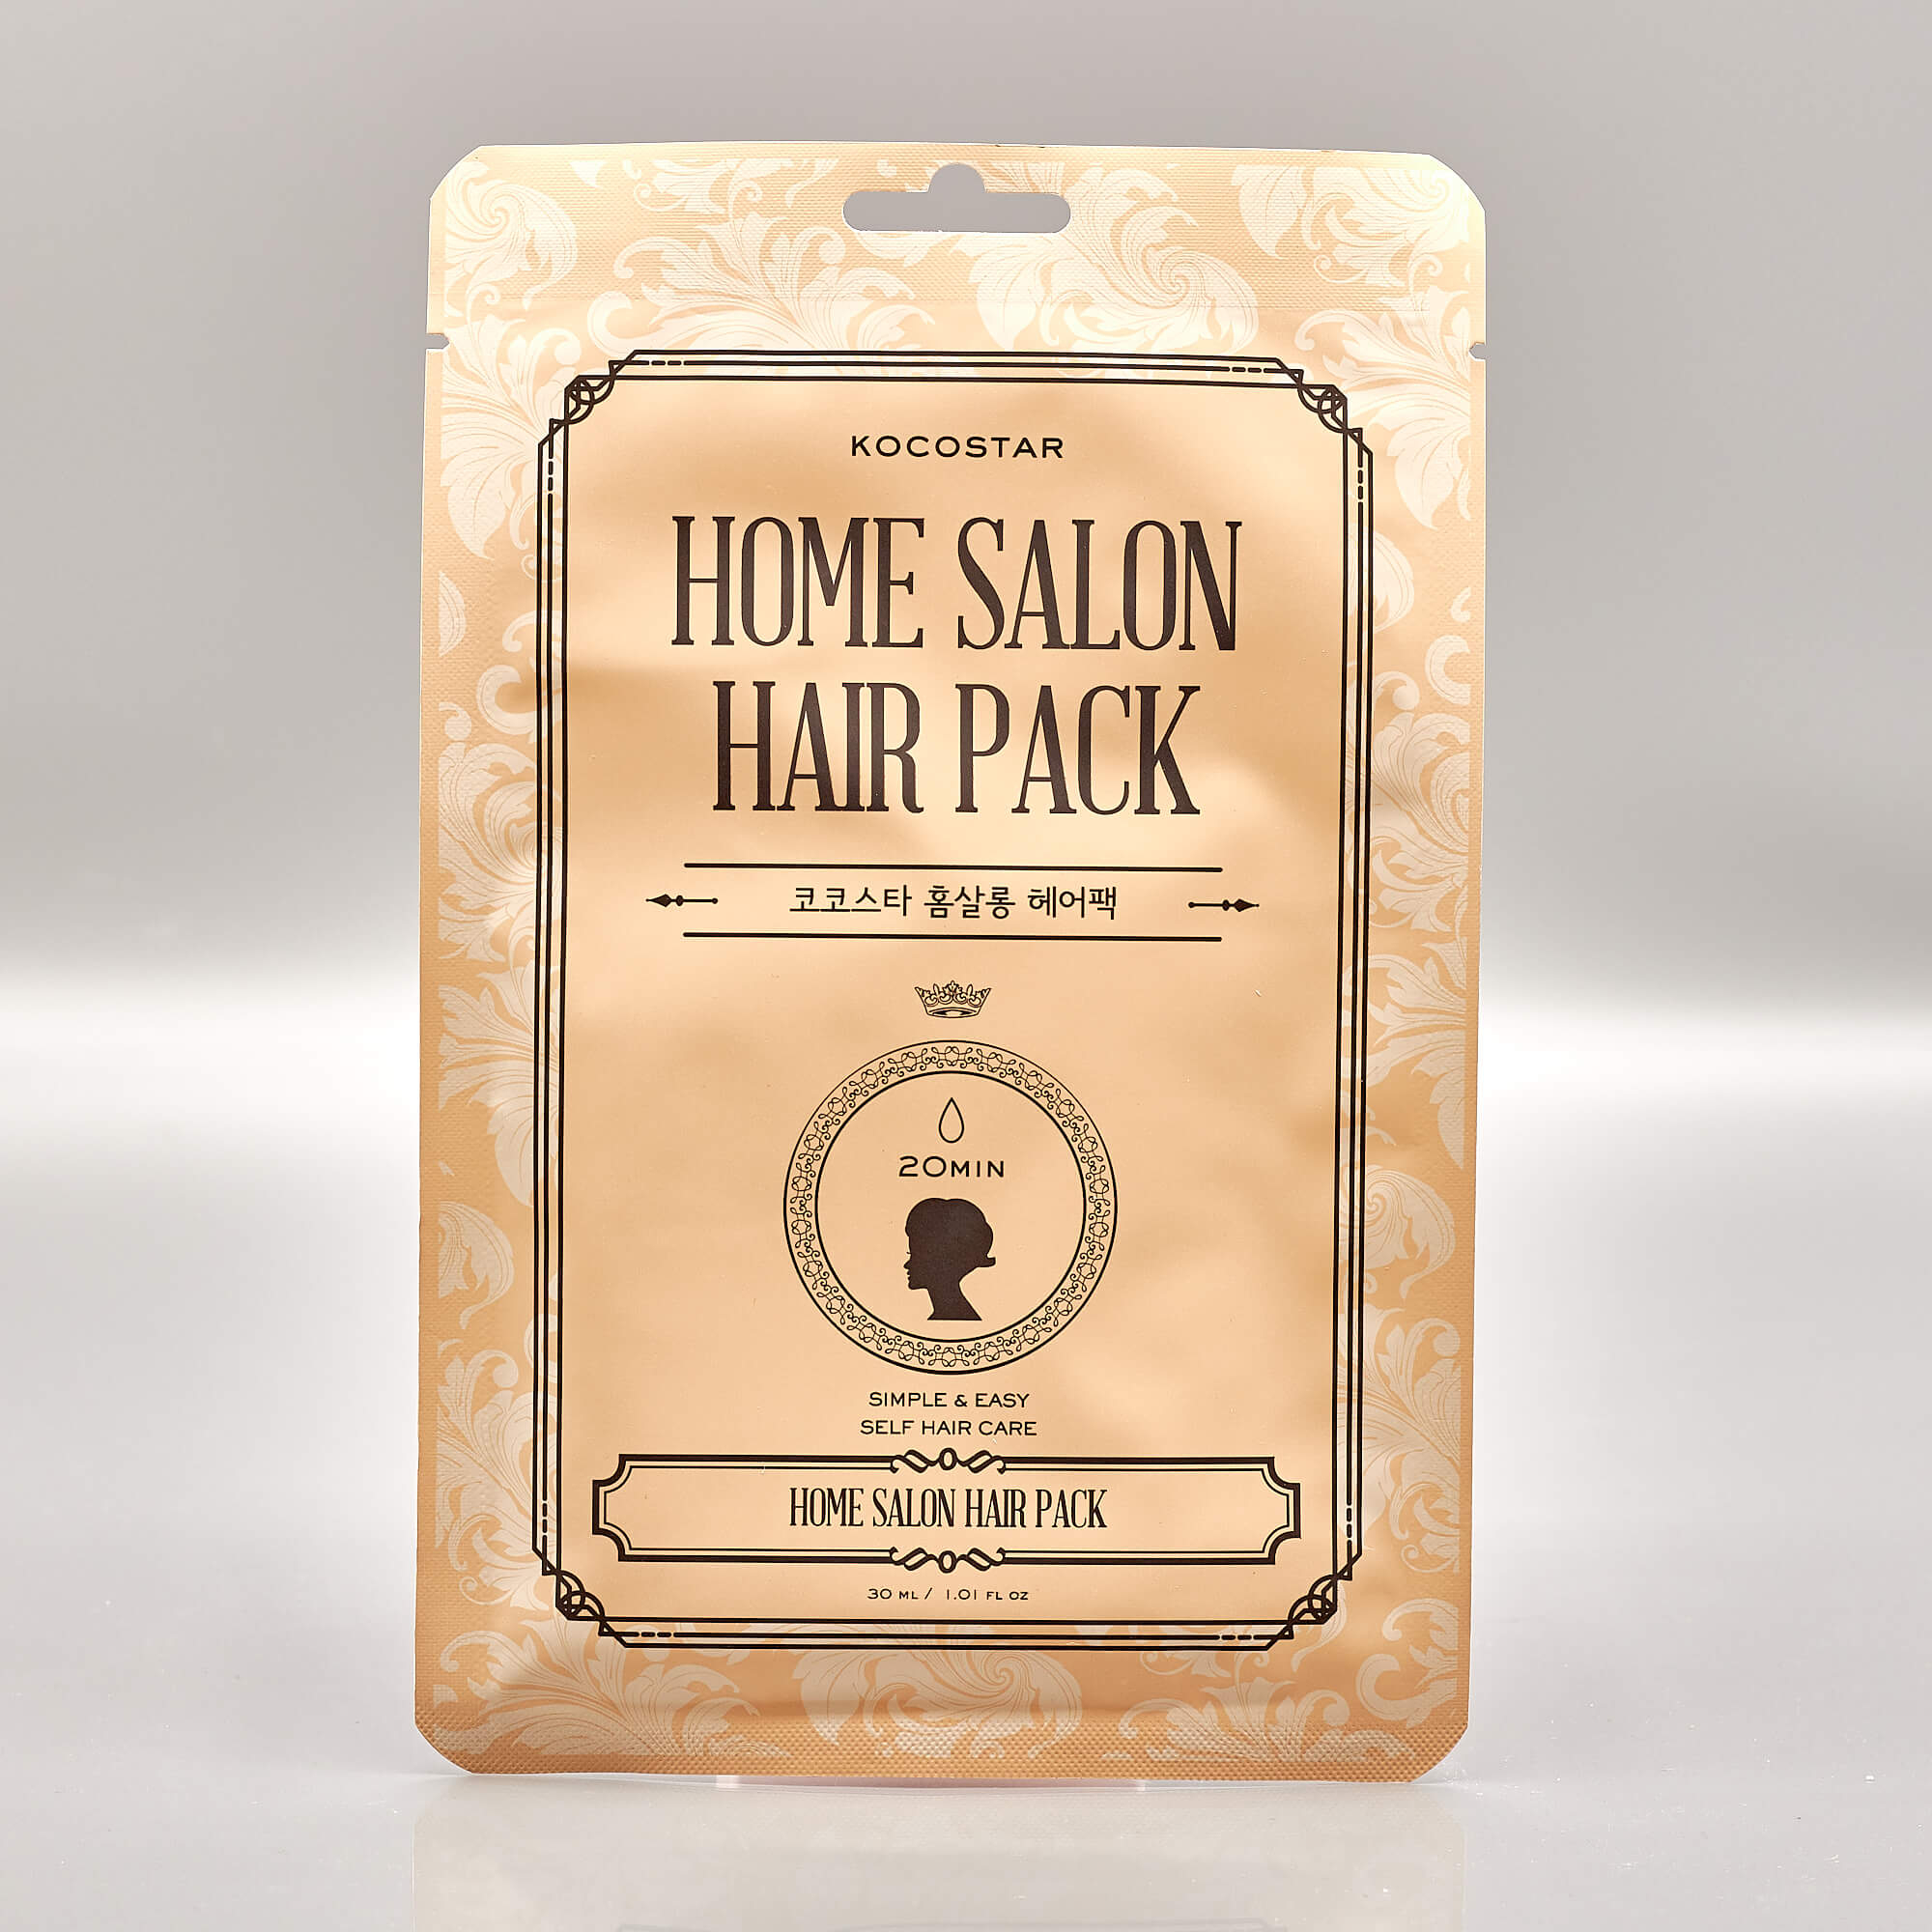 Kocostar Home Salon Hair Pack bei Juui kaufen